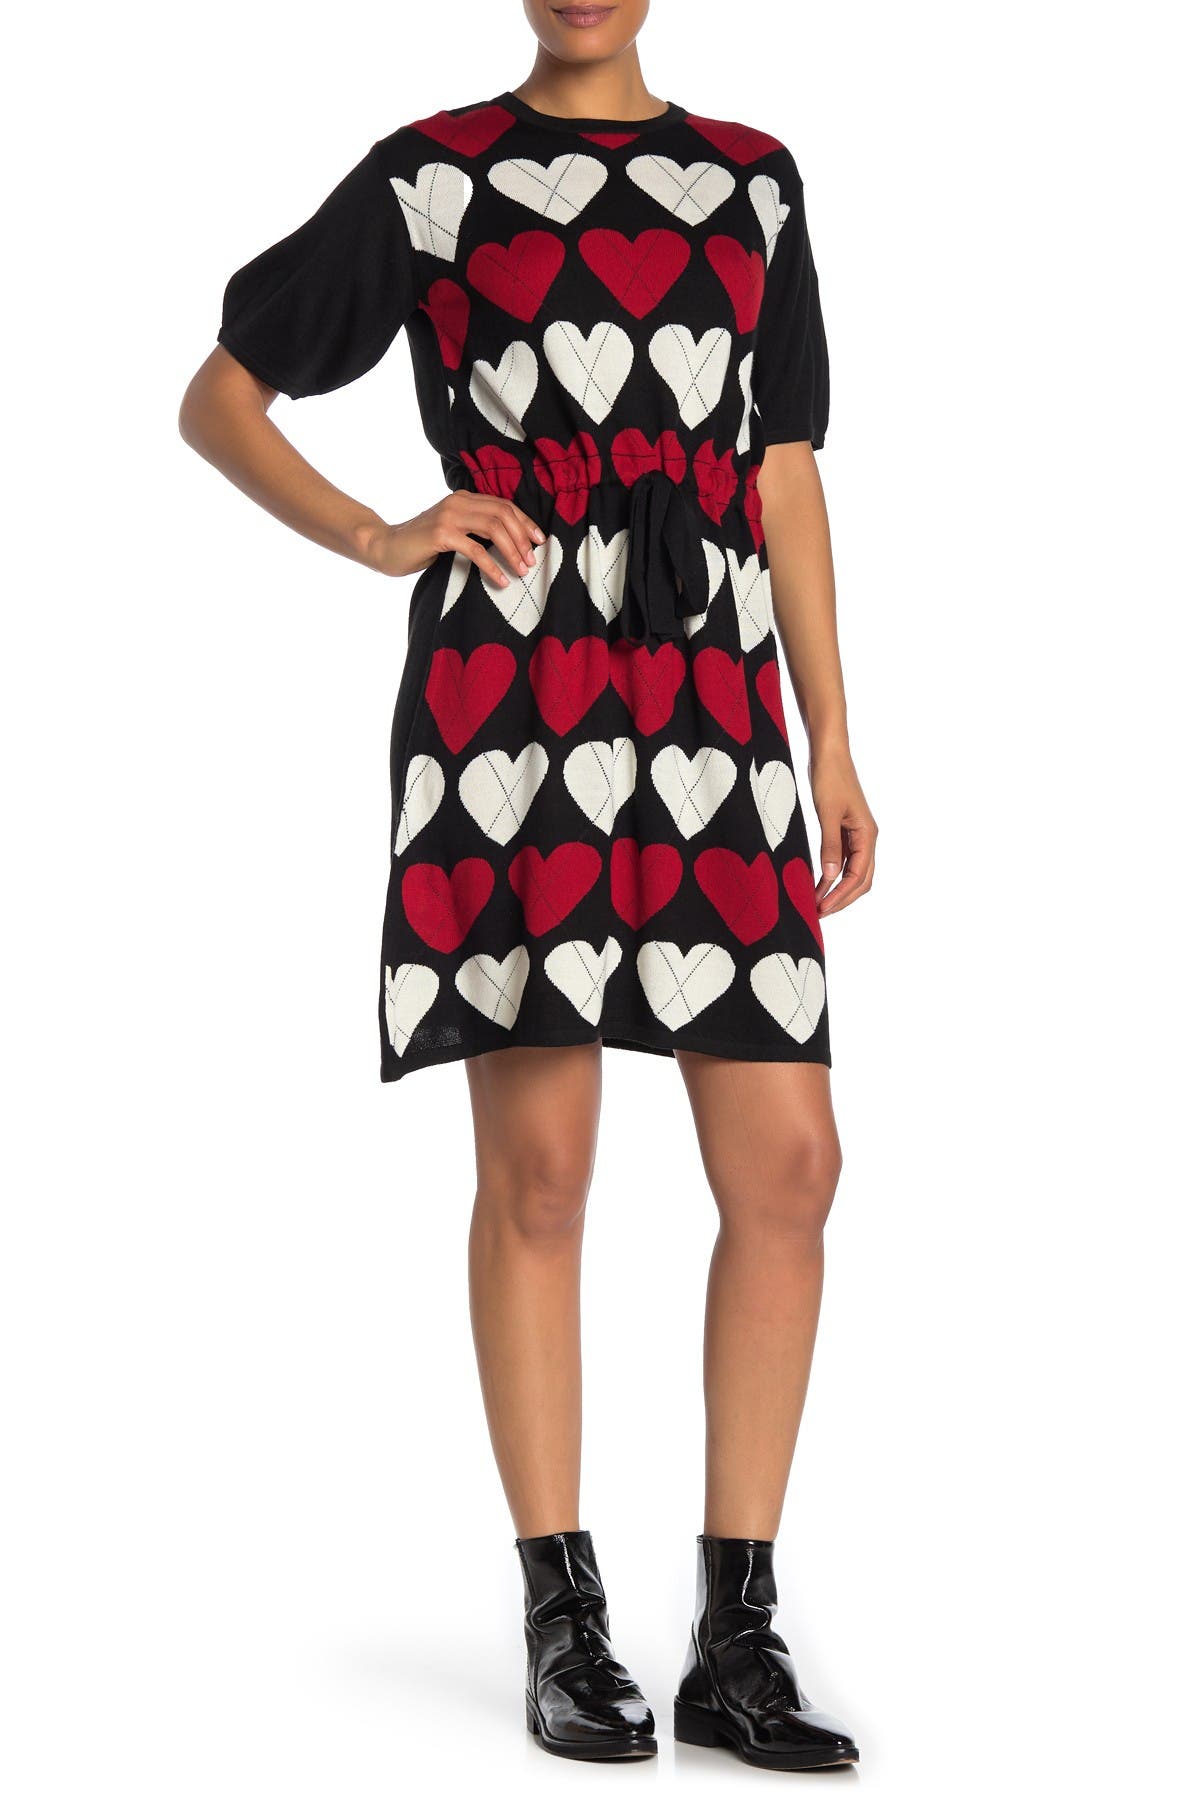 LOVE Moschino | Heart Sweater Dress 